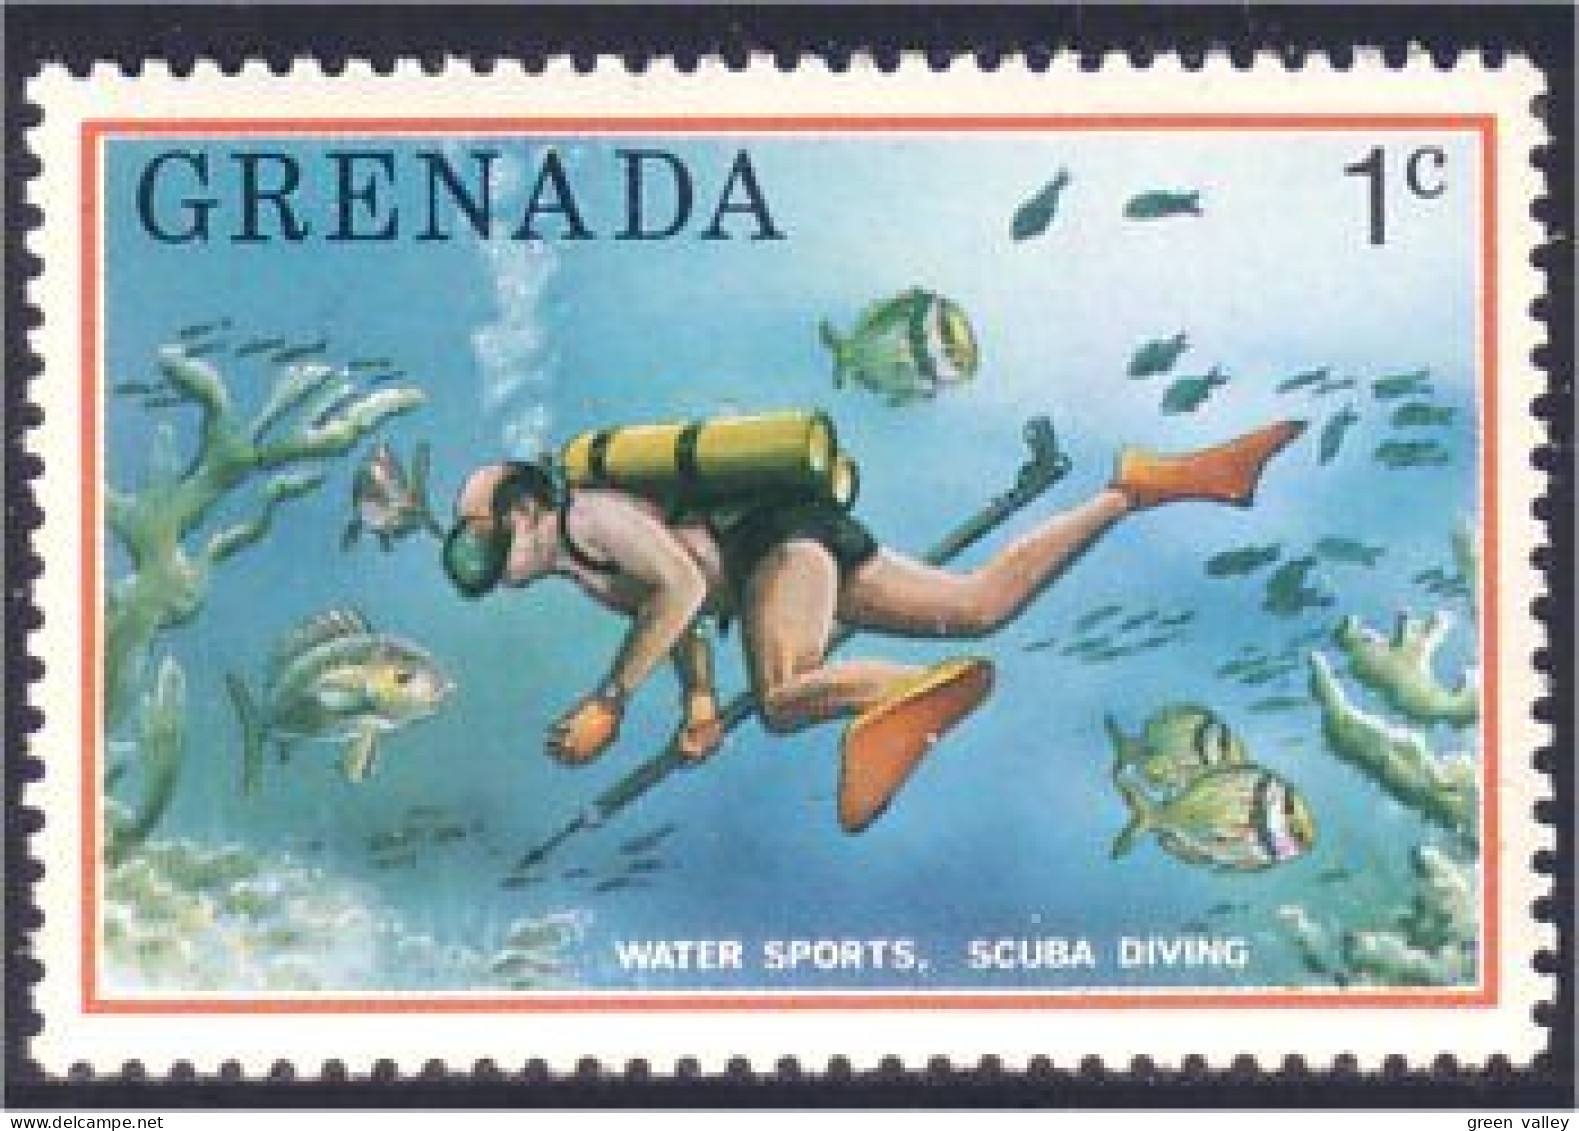 460 Grenada Scuba Diving Diver Plongee Peche Fishing Snorkelling MNH ** Neuf SC (GRE-133) - Buceo